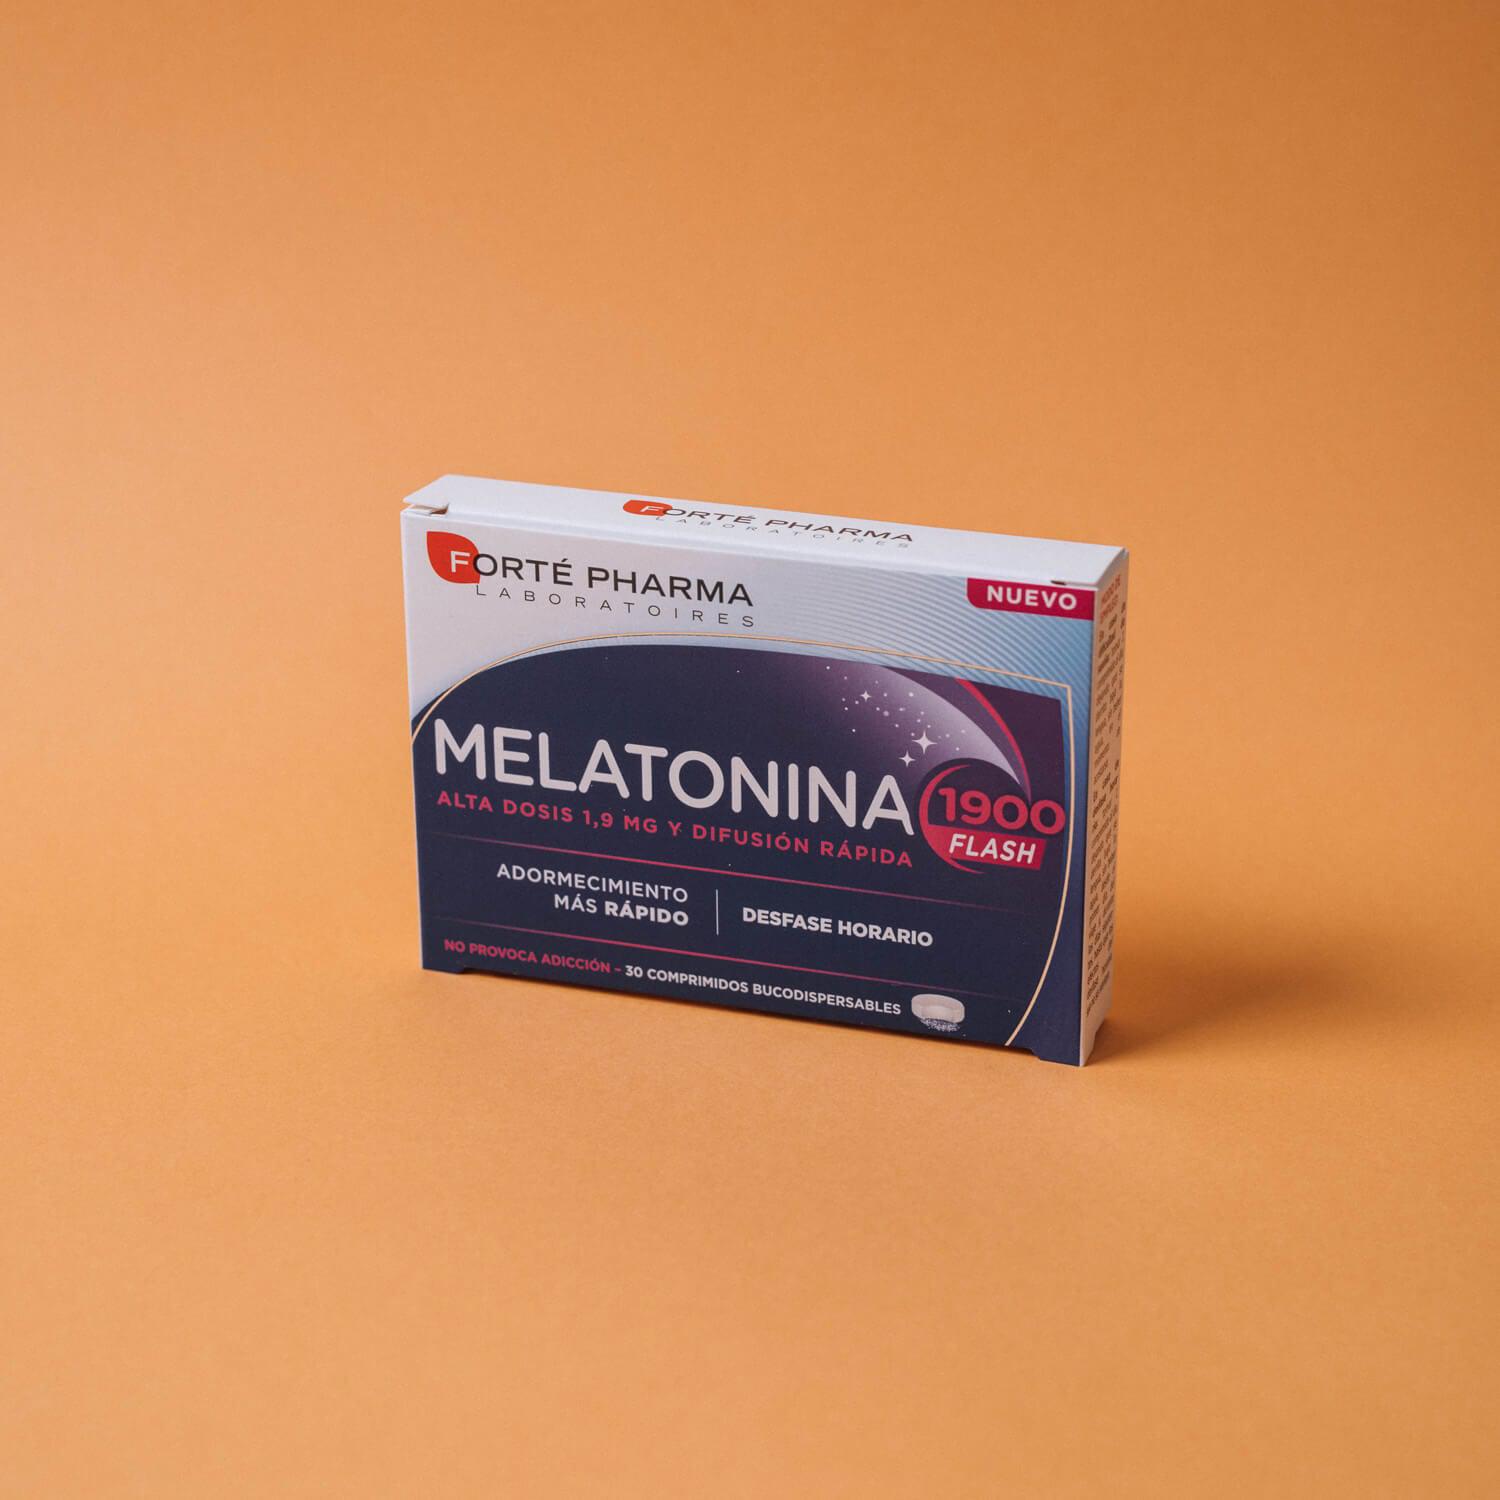 melatonina 1900 flash-Forté Pharma